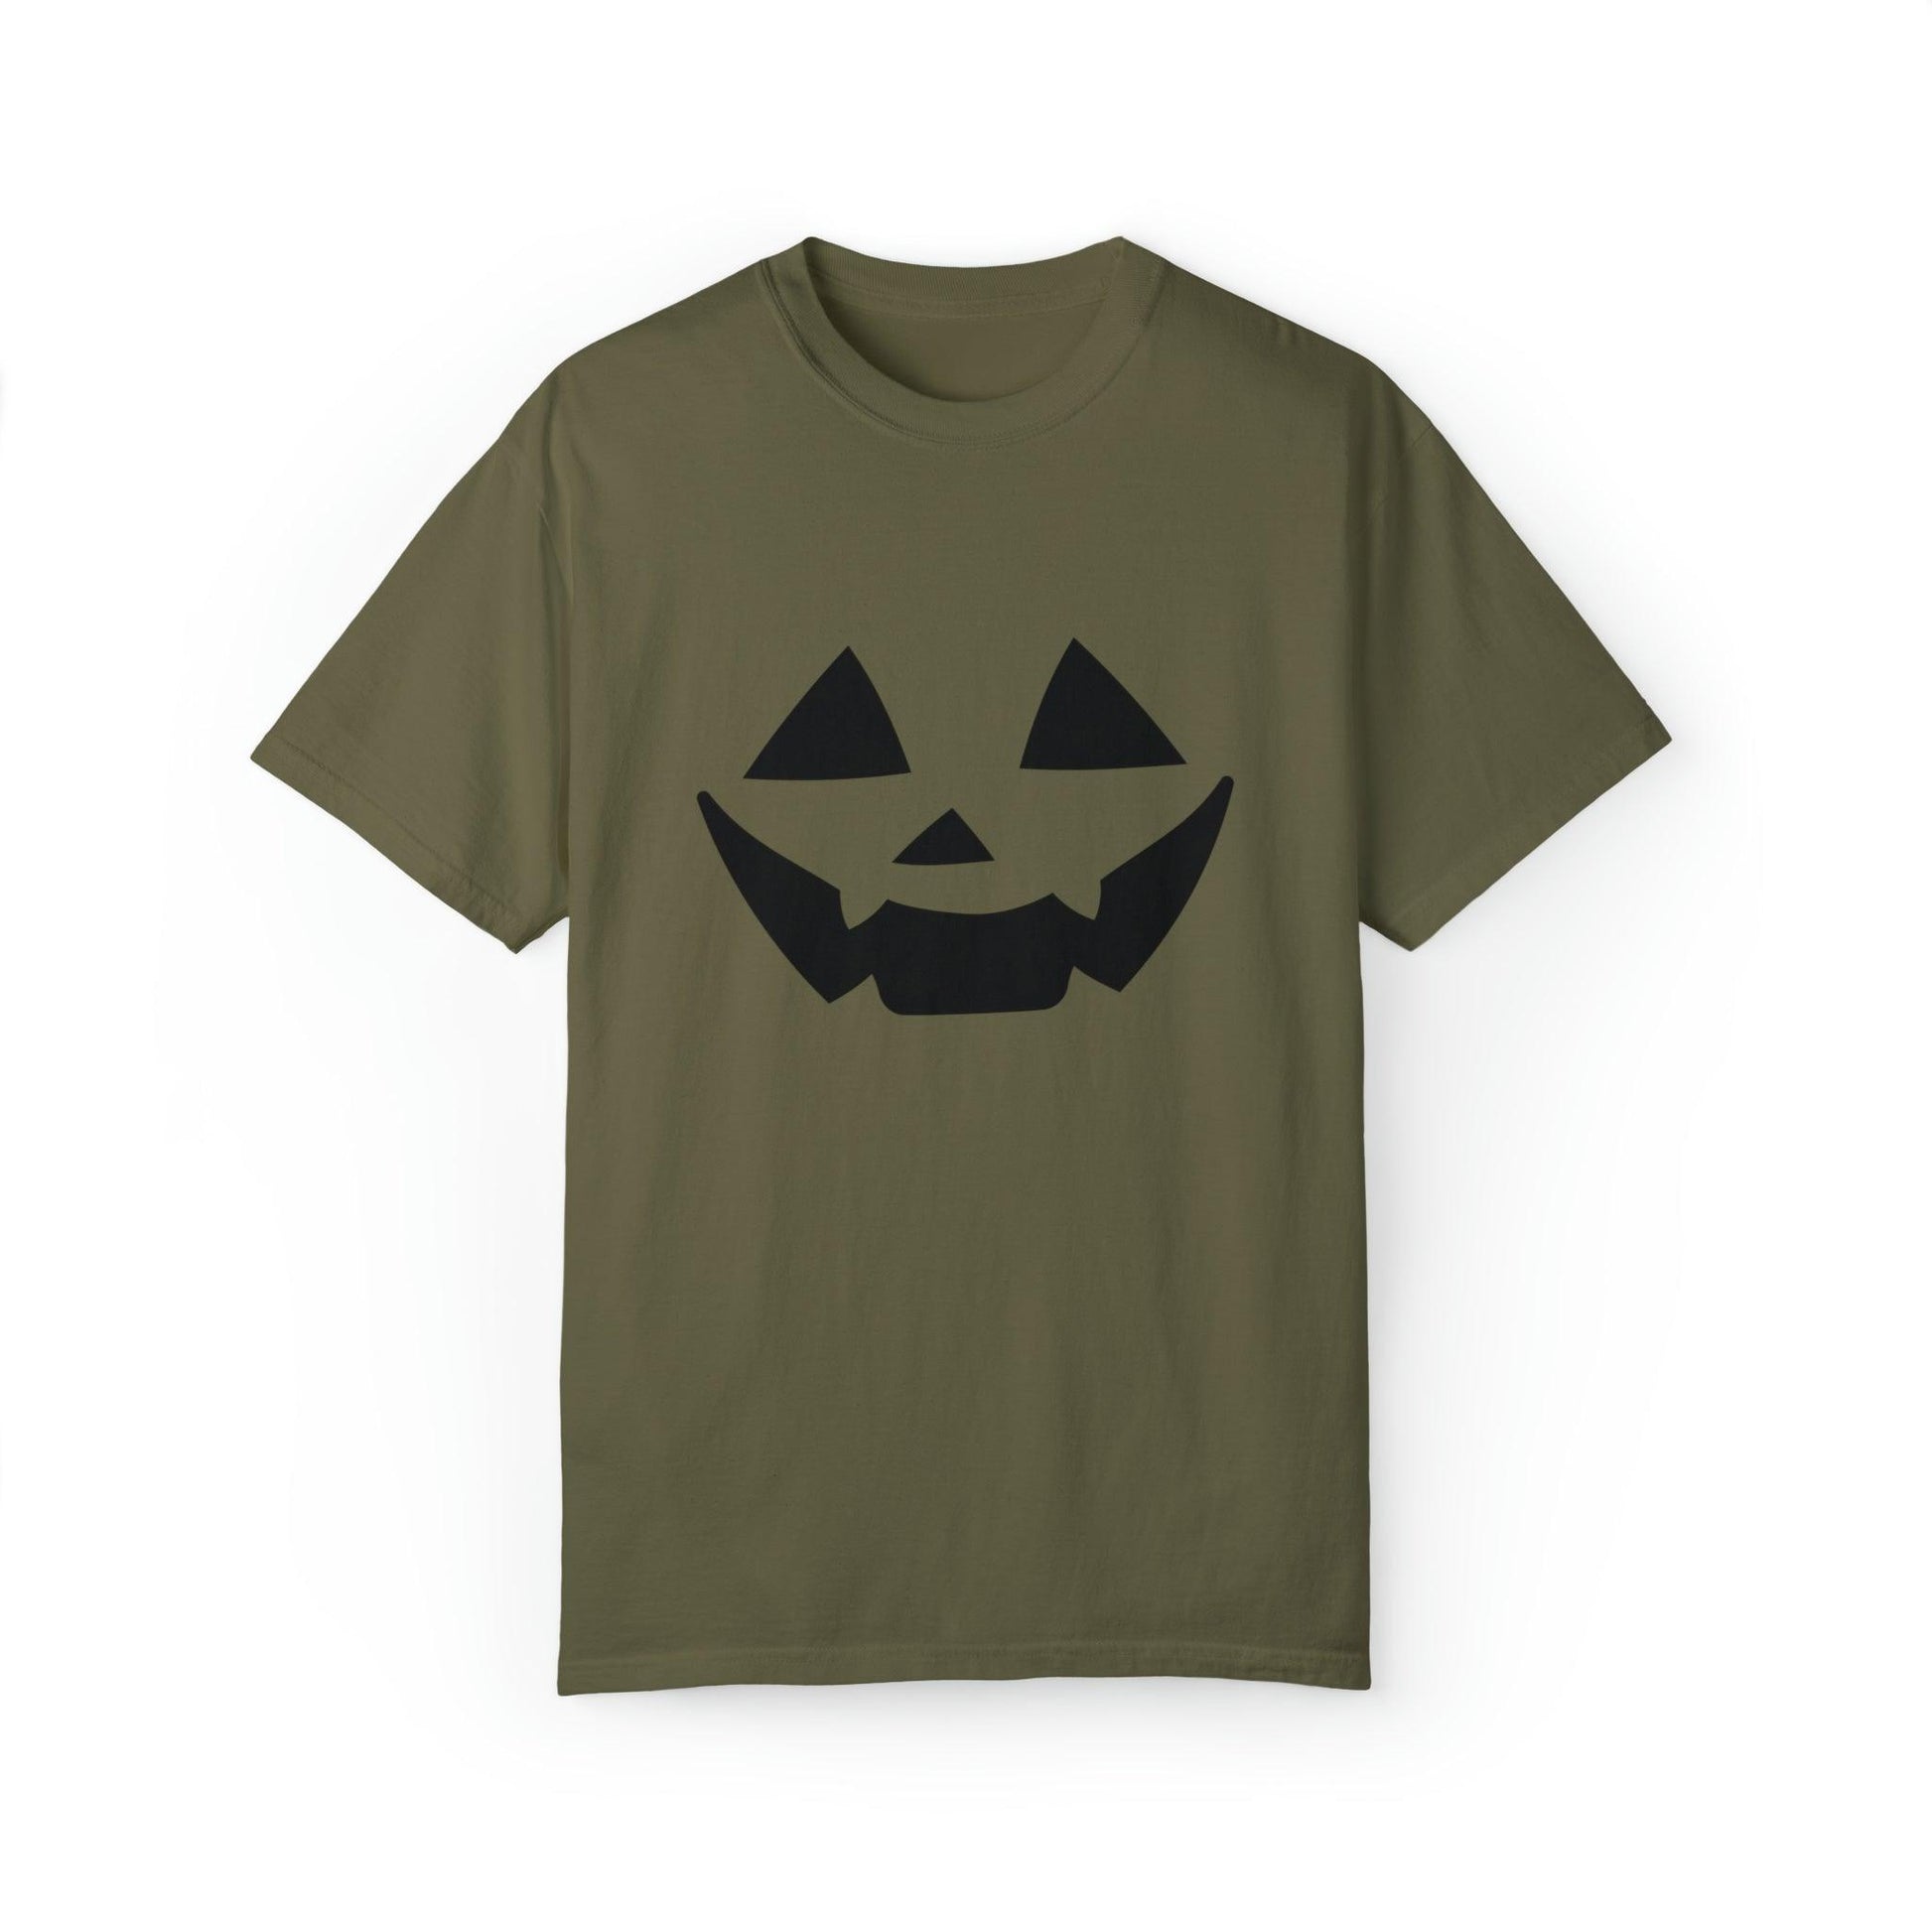 Pumpkin Face Halloween Shirt Retro Halloween Tshirt, Vintage Shirt Halloween Shirt Pumpkin Face Halloween Costume Comfort Colors - Giftsmojo